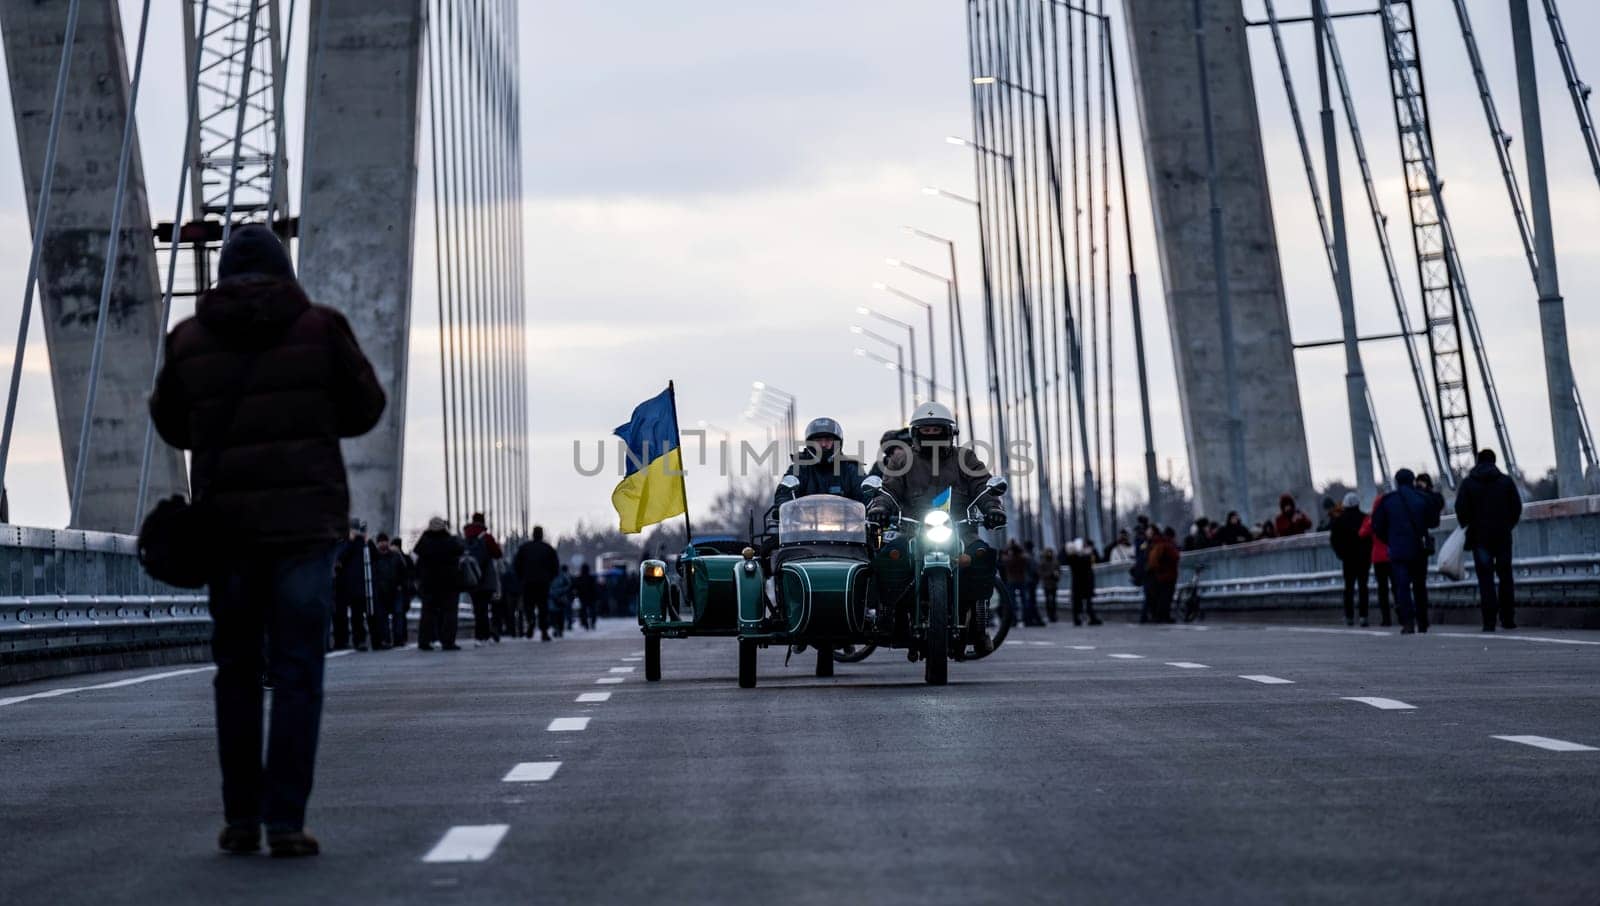 Bikers on motorcycle drive over bridge with ukraine flag. download image